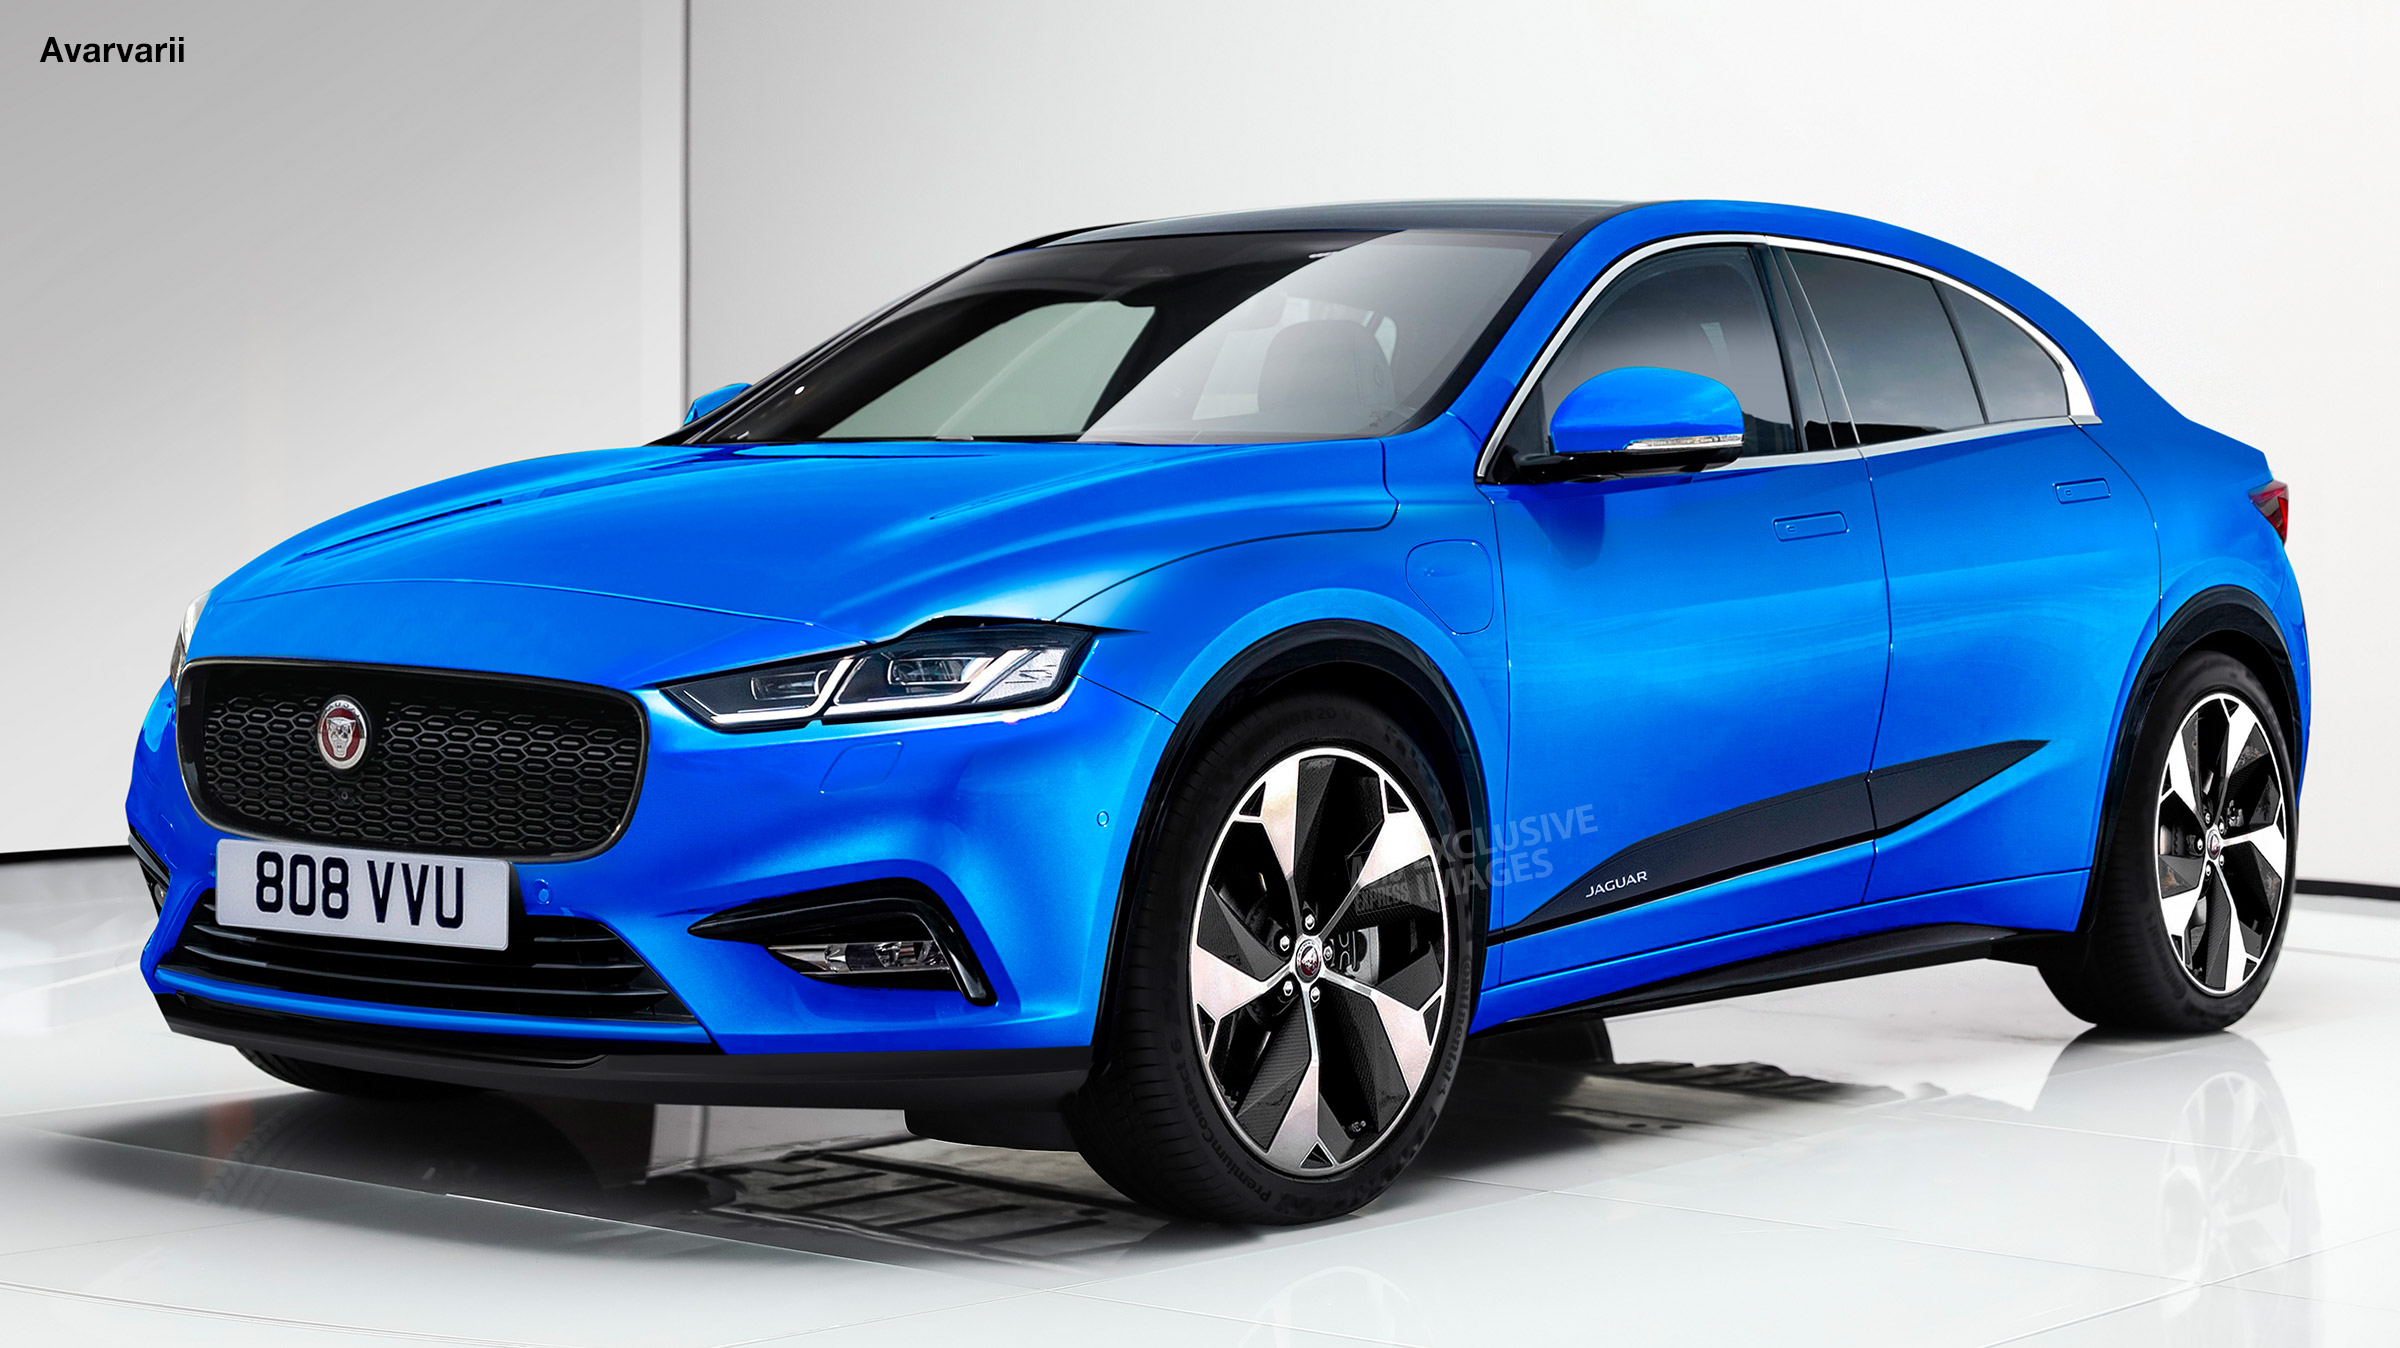 New baby electric Jaguar to take on Tesla Model 3  Auto 